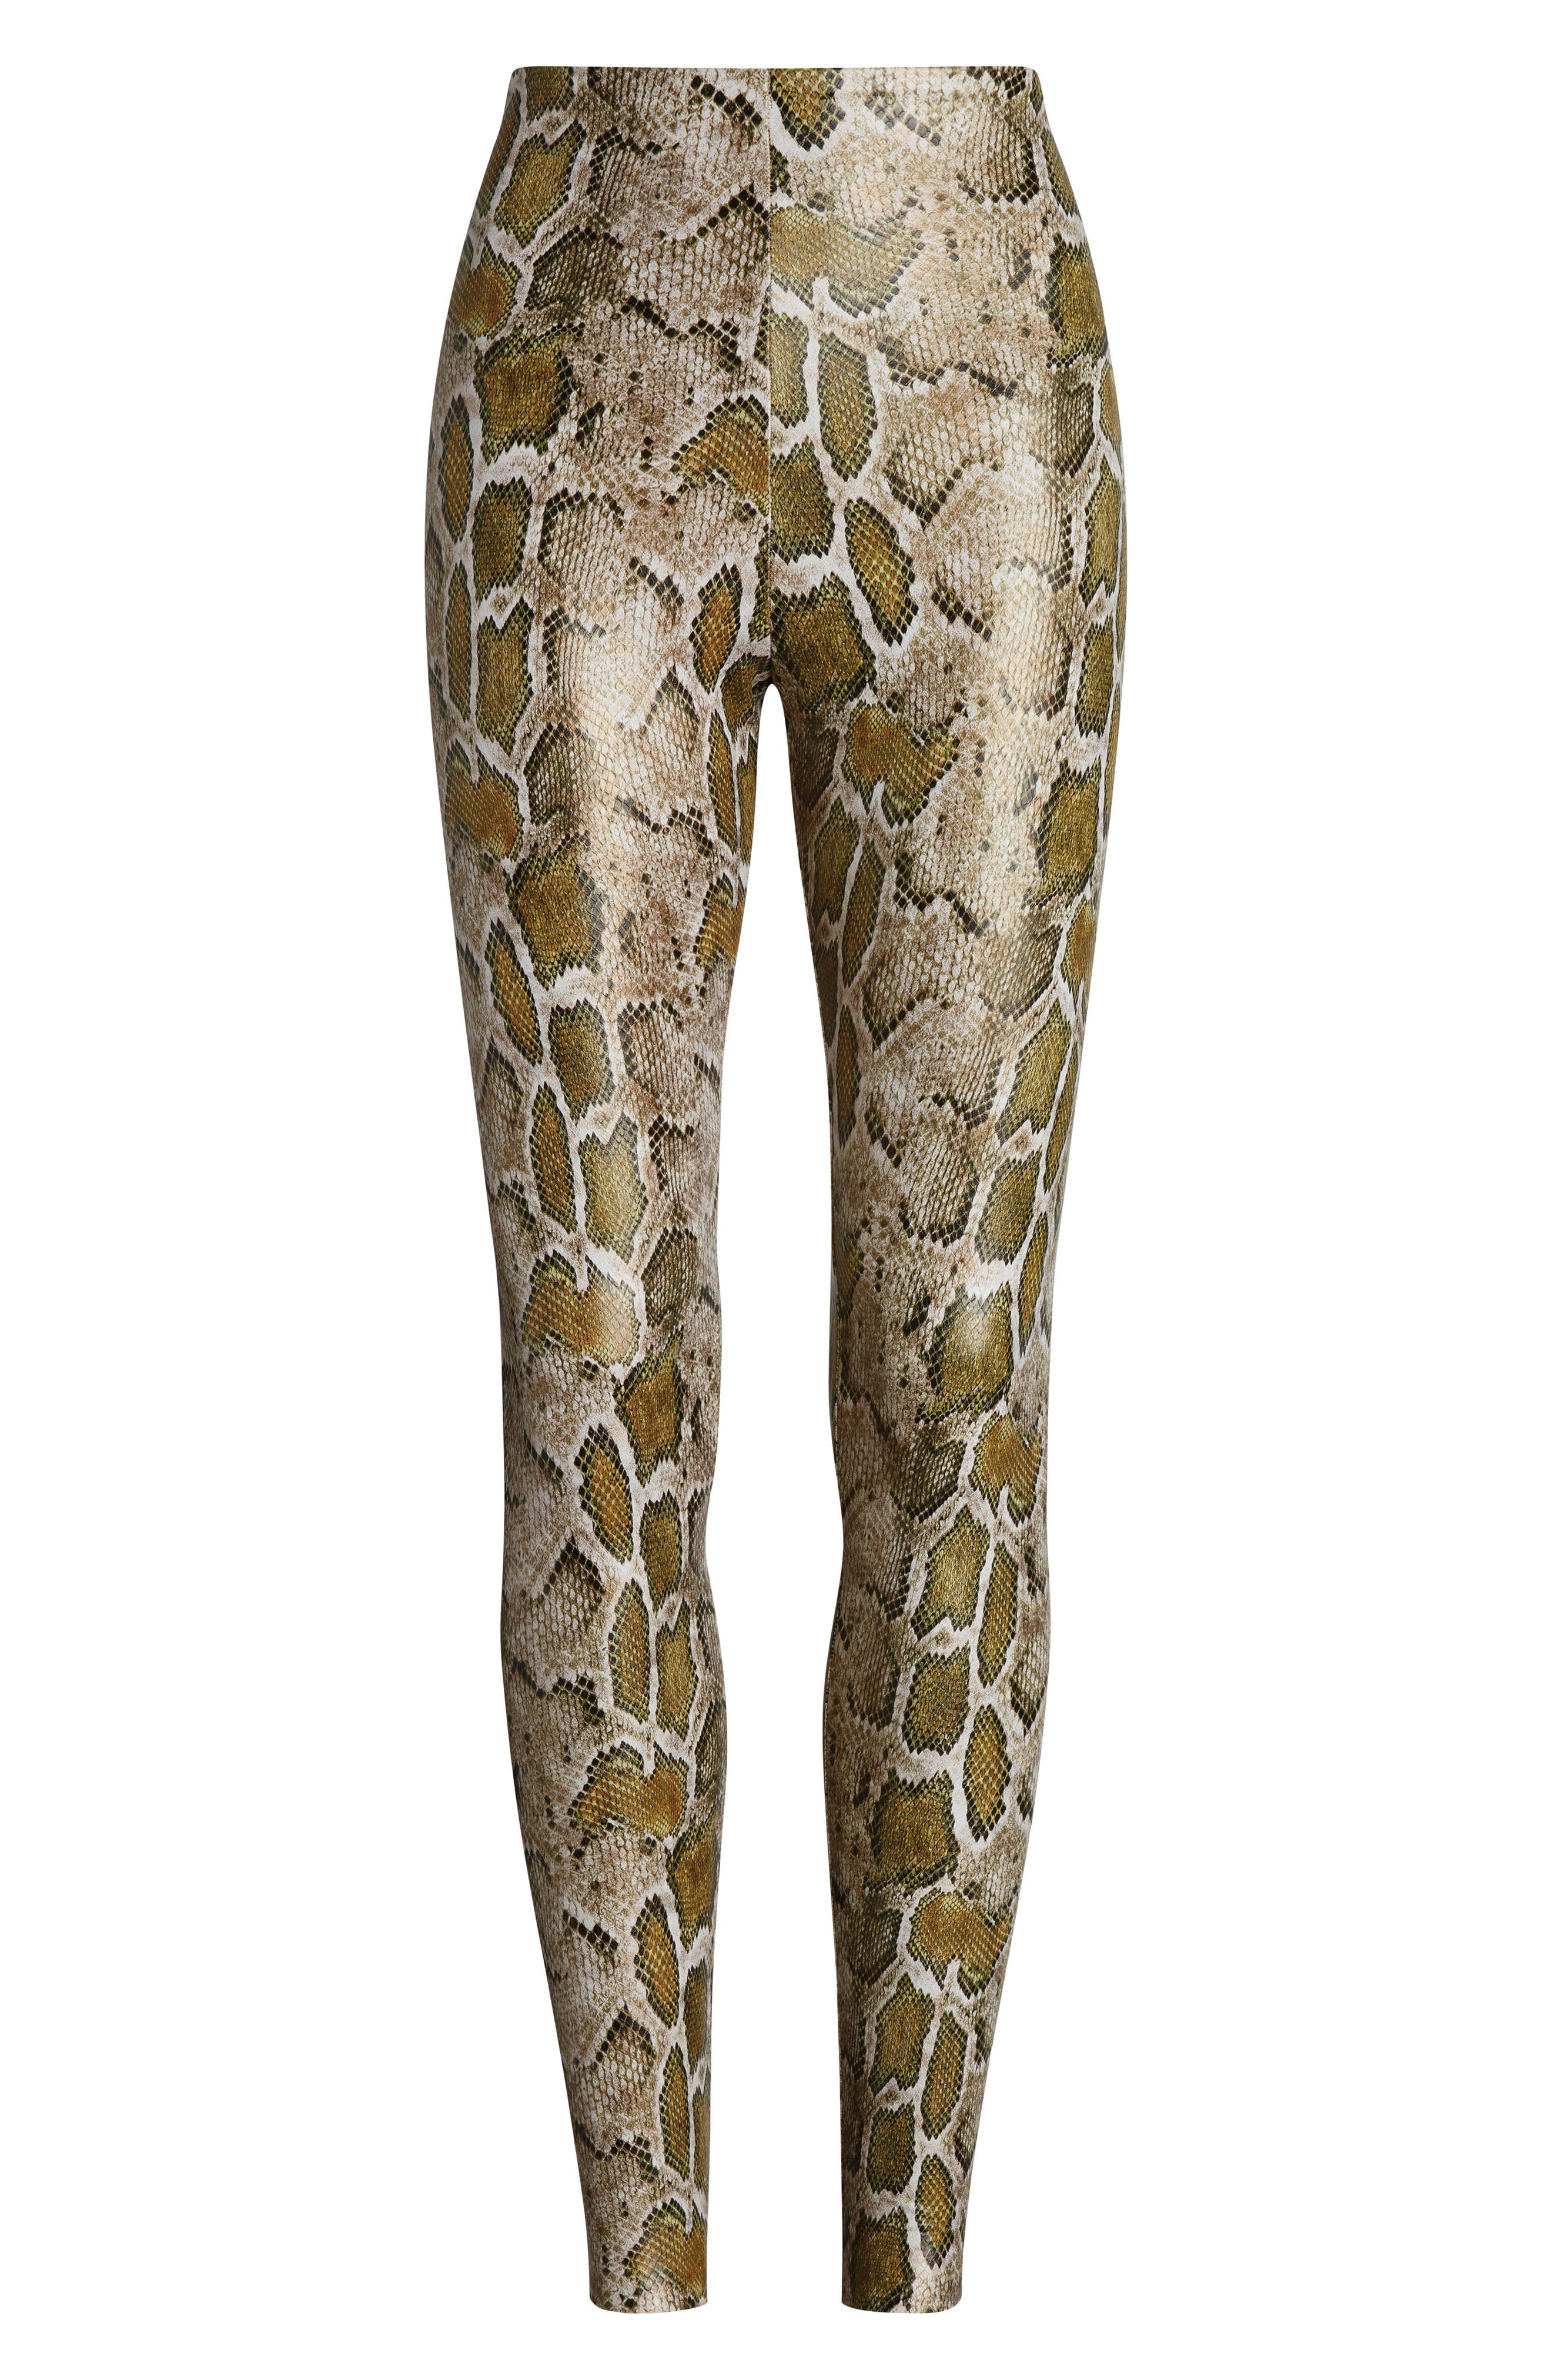 Women's Wet Look Snakeskin Animal Print Stretchy Pants High Waist Slim Leggings 